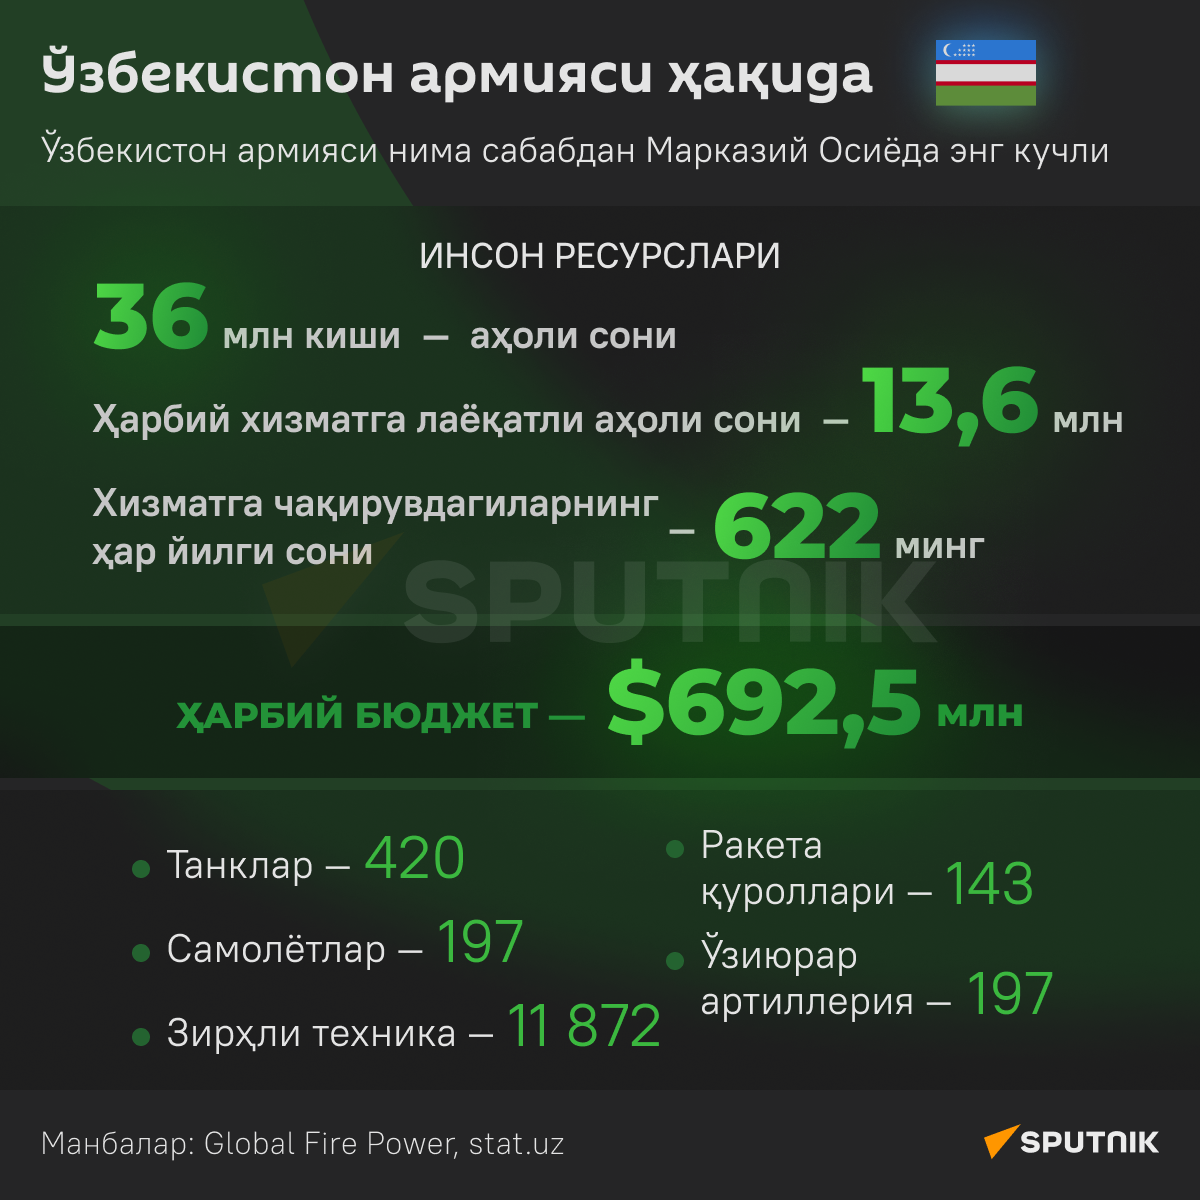 Все об армии Узбекистана инфографика узб - Sputnik Ўзбекистон